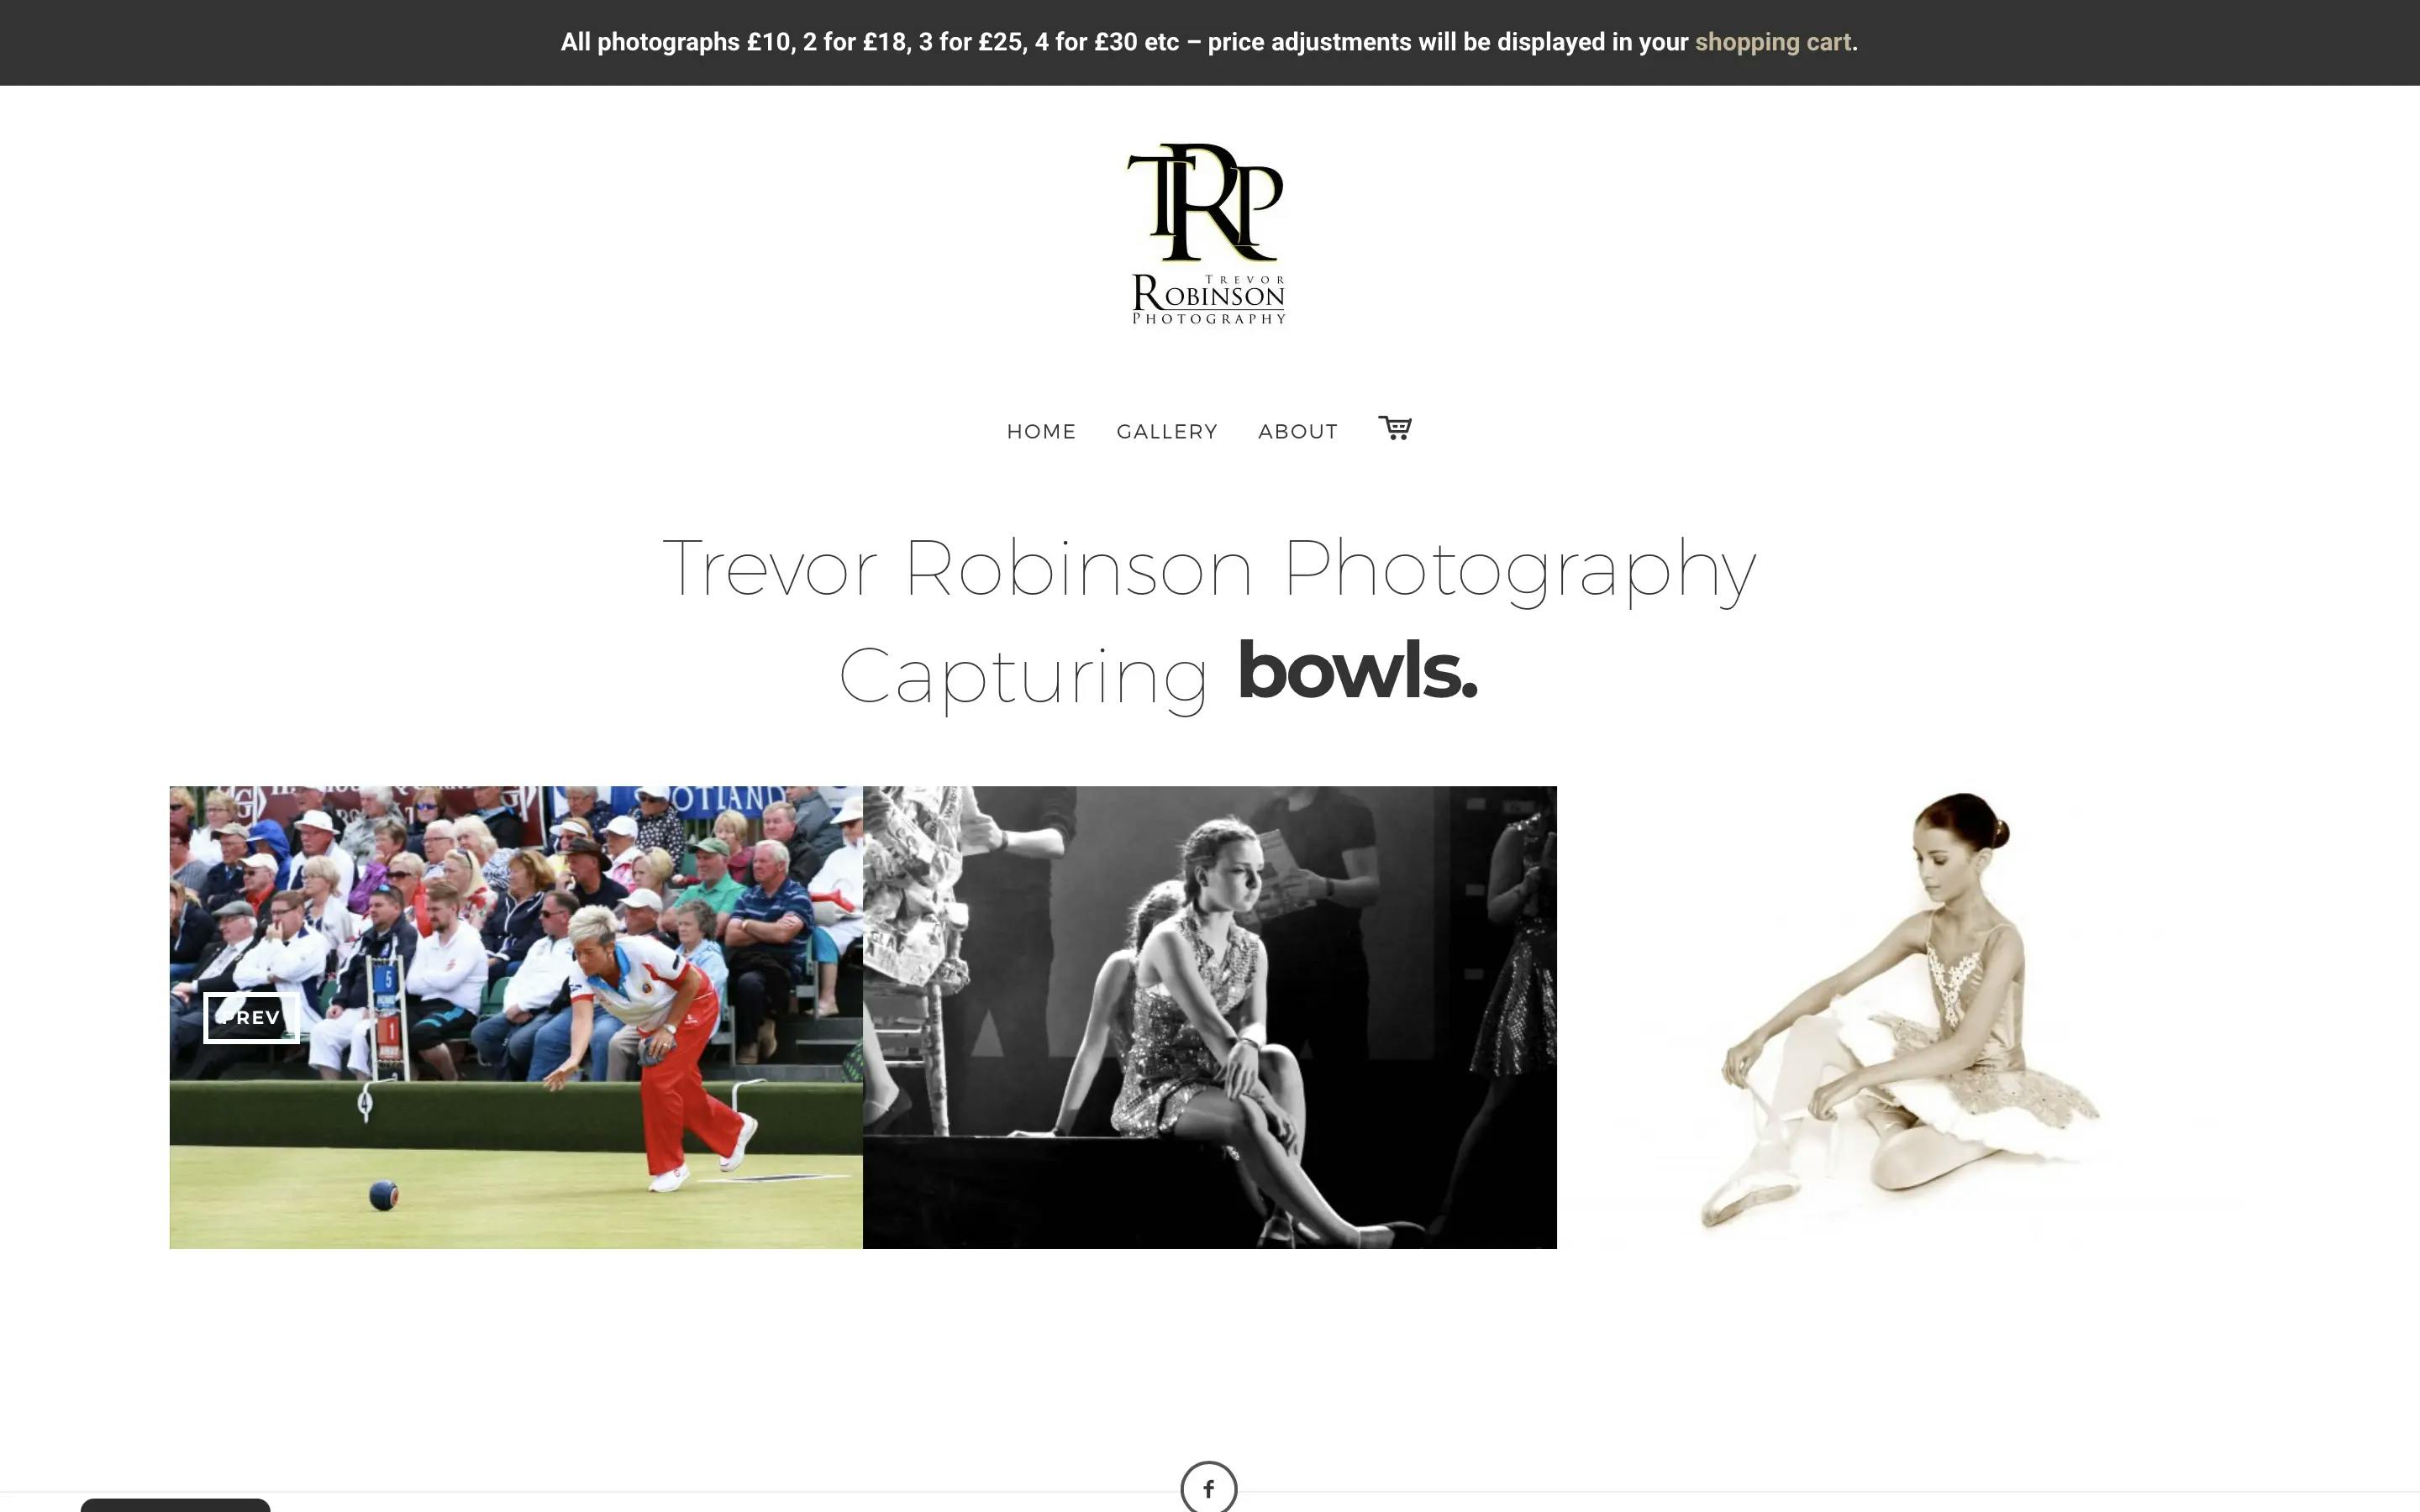 Trevor Robinson Photography homepage screenshot